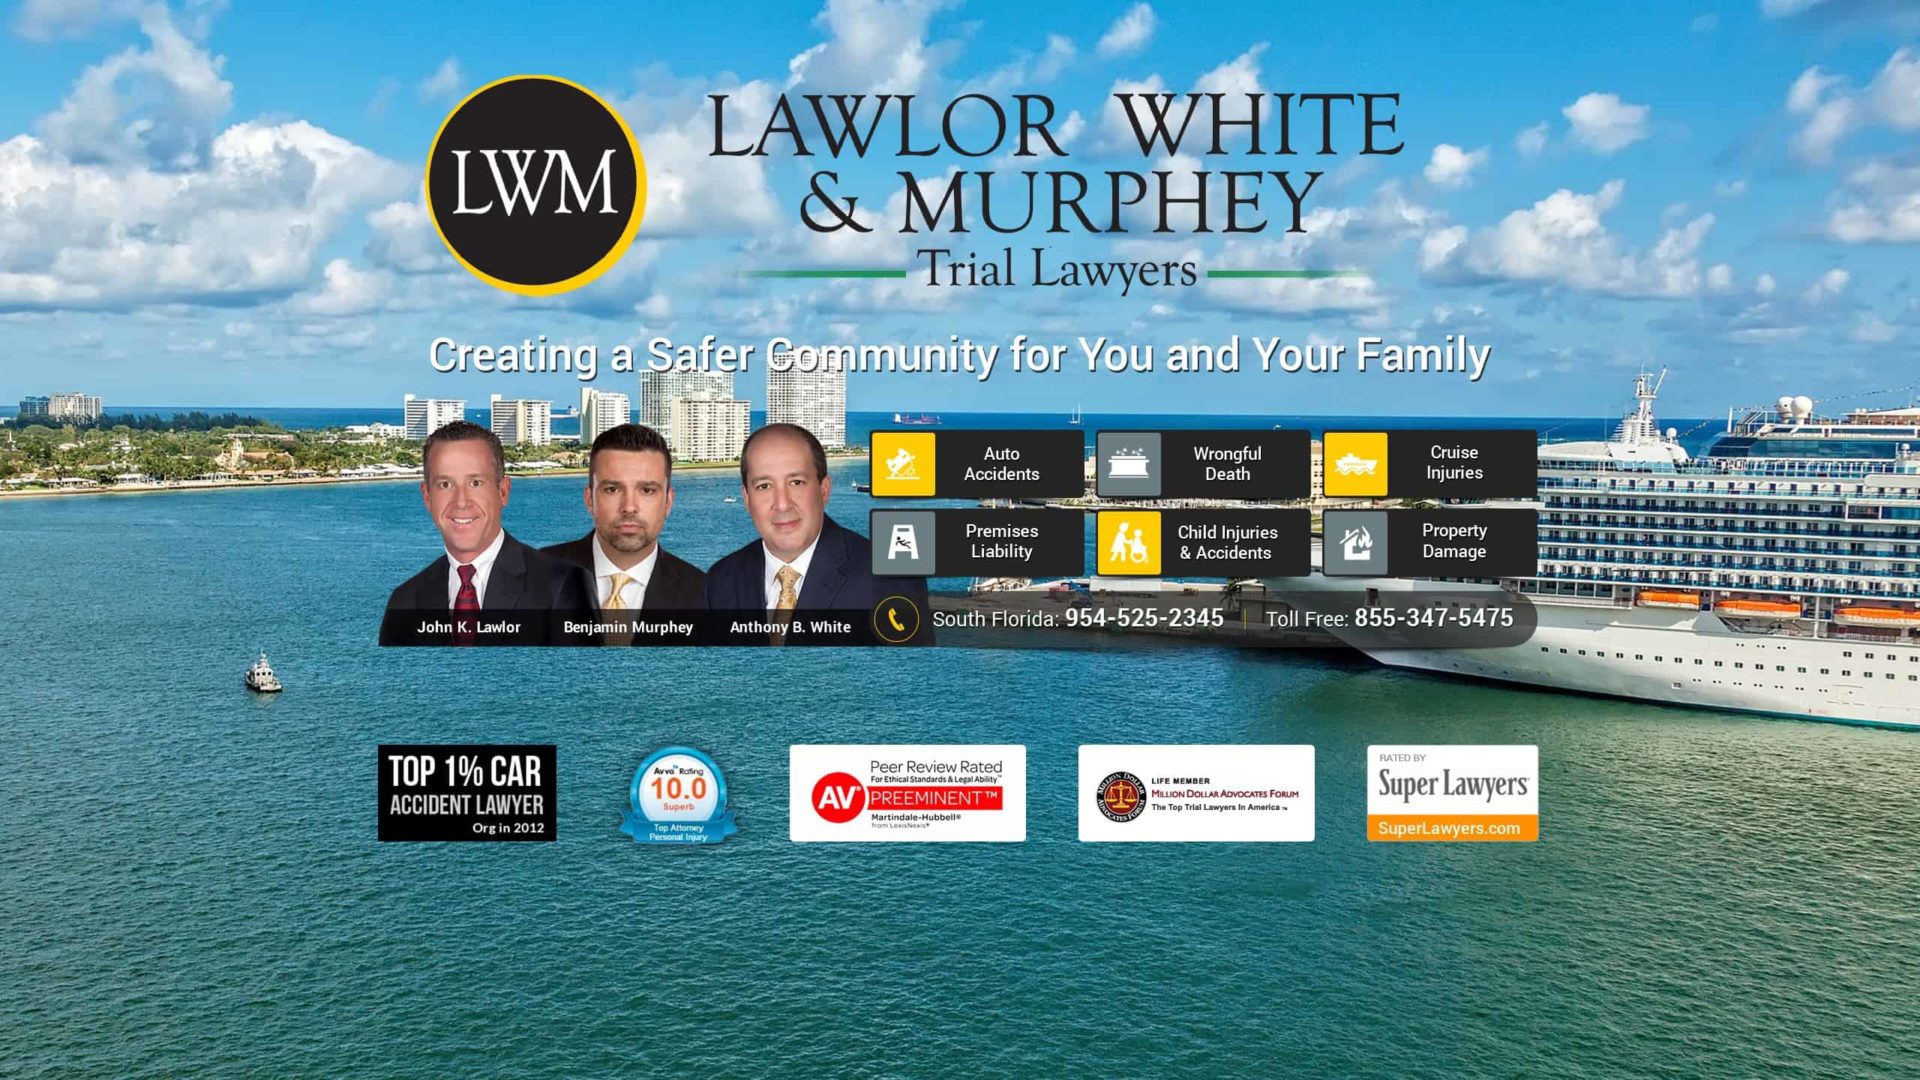 Lawlor, White & Murphey